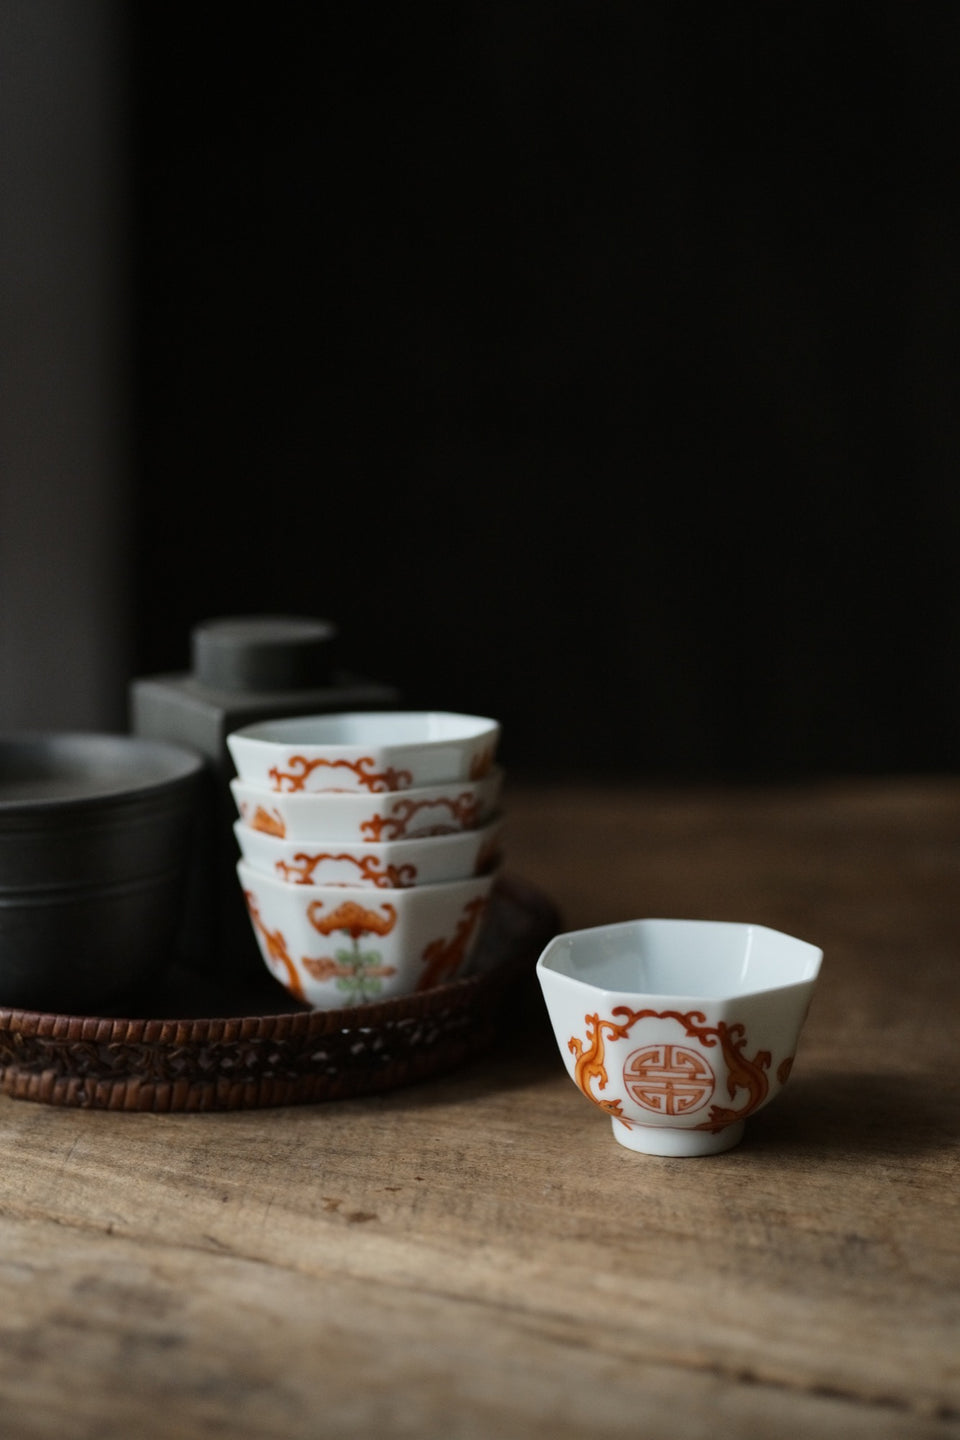 Caihui Good fortune octagon teacup